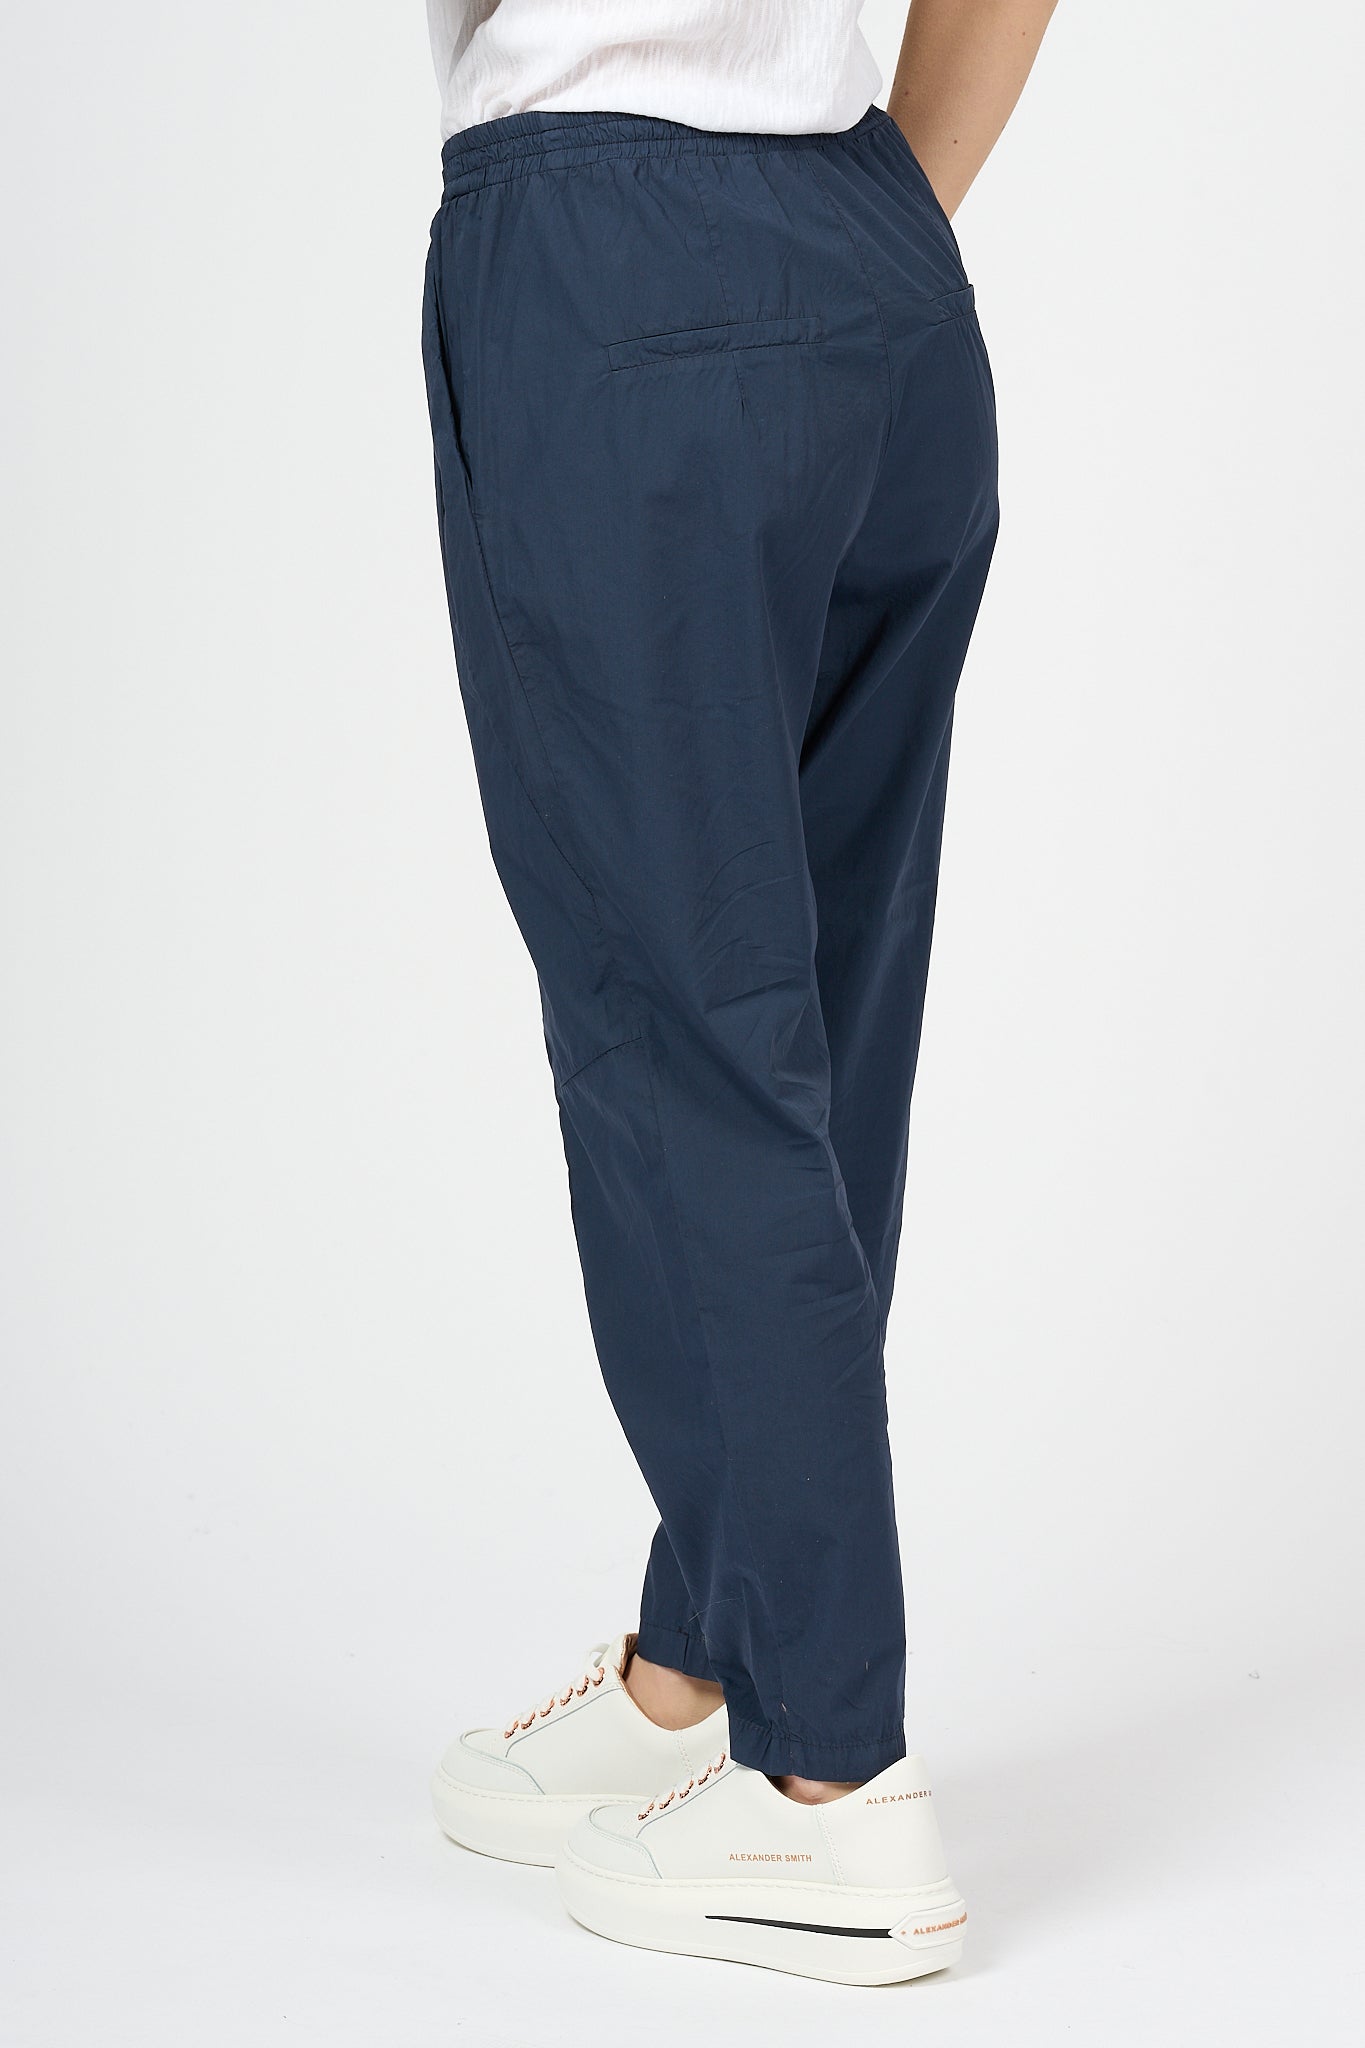 Transit Pantalone Cotone Blu Navy Donna-4